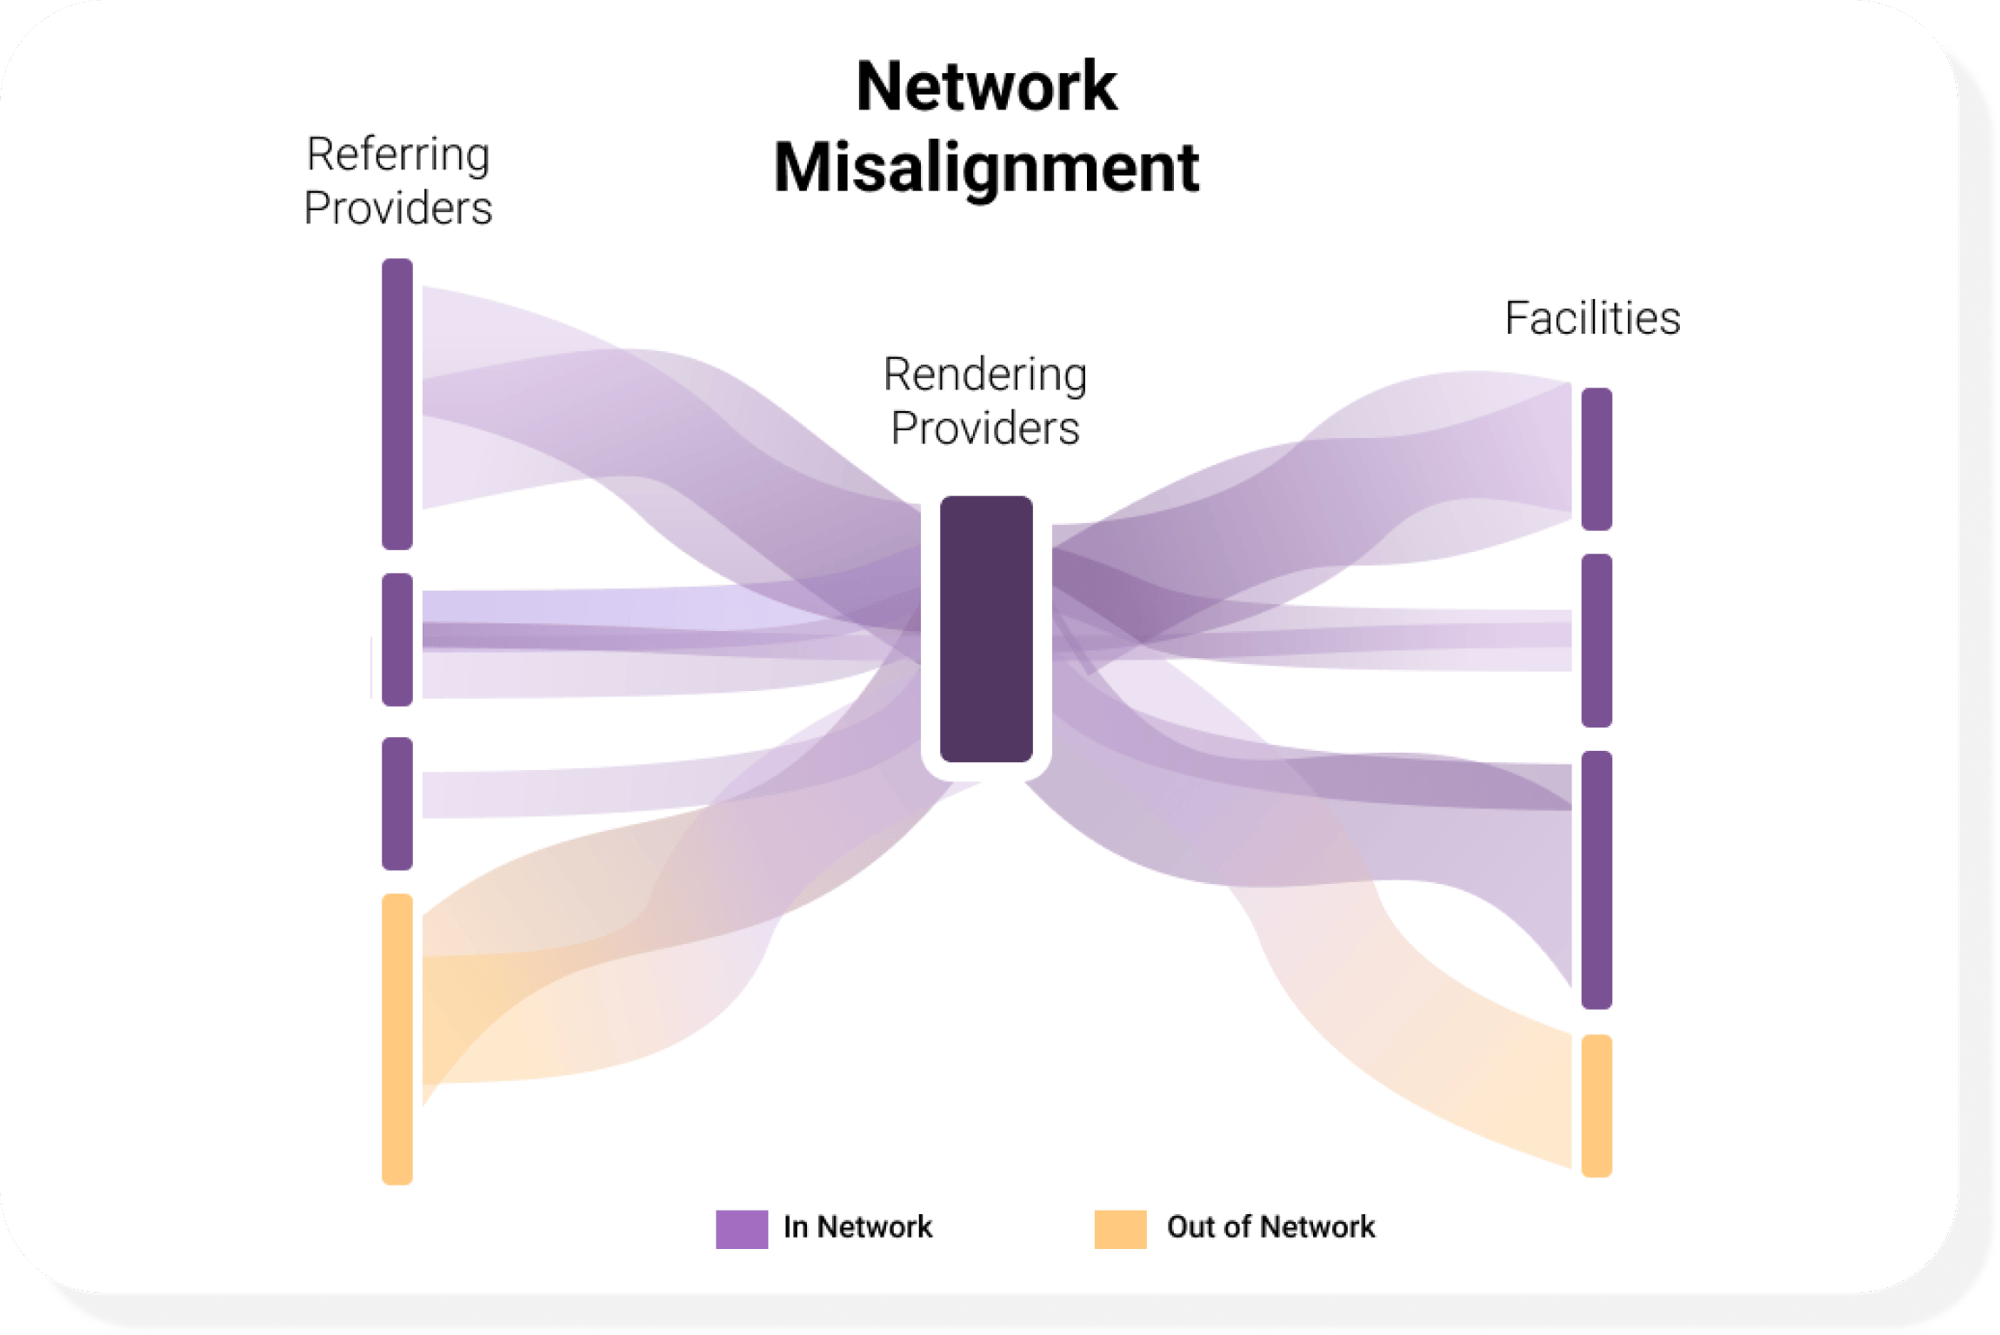 Network Misalignment